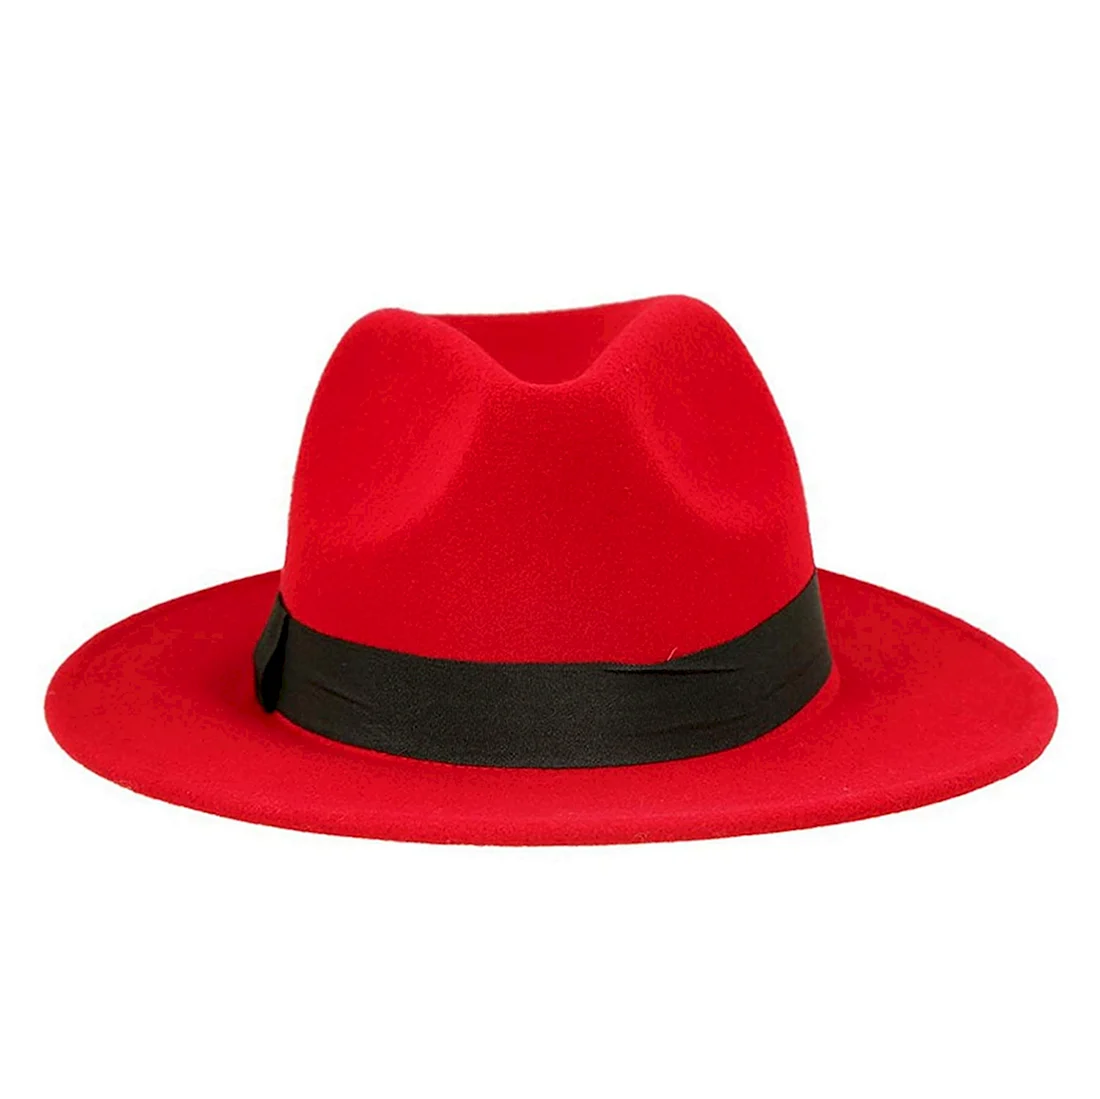 Vintage Unisex Wool Jazz hats large Brim felt cloche Cowboy